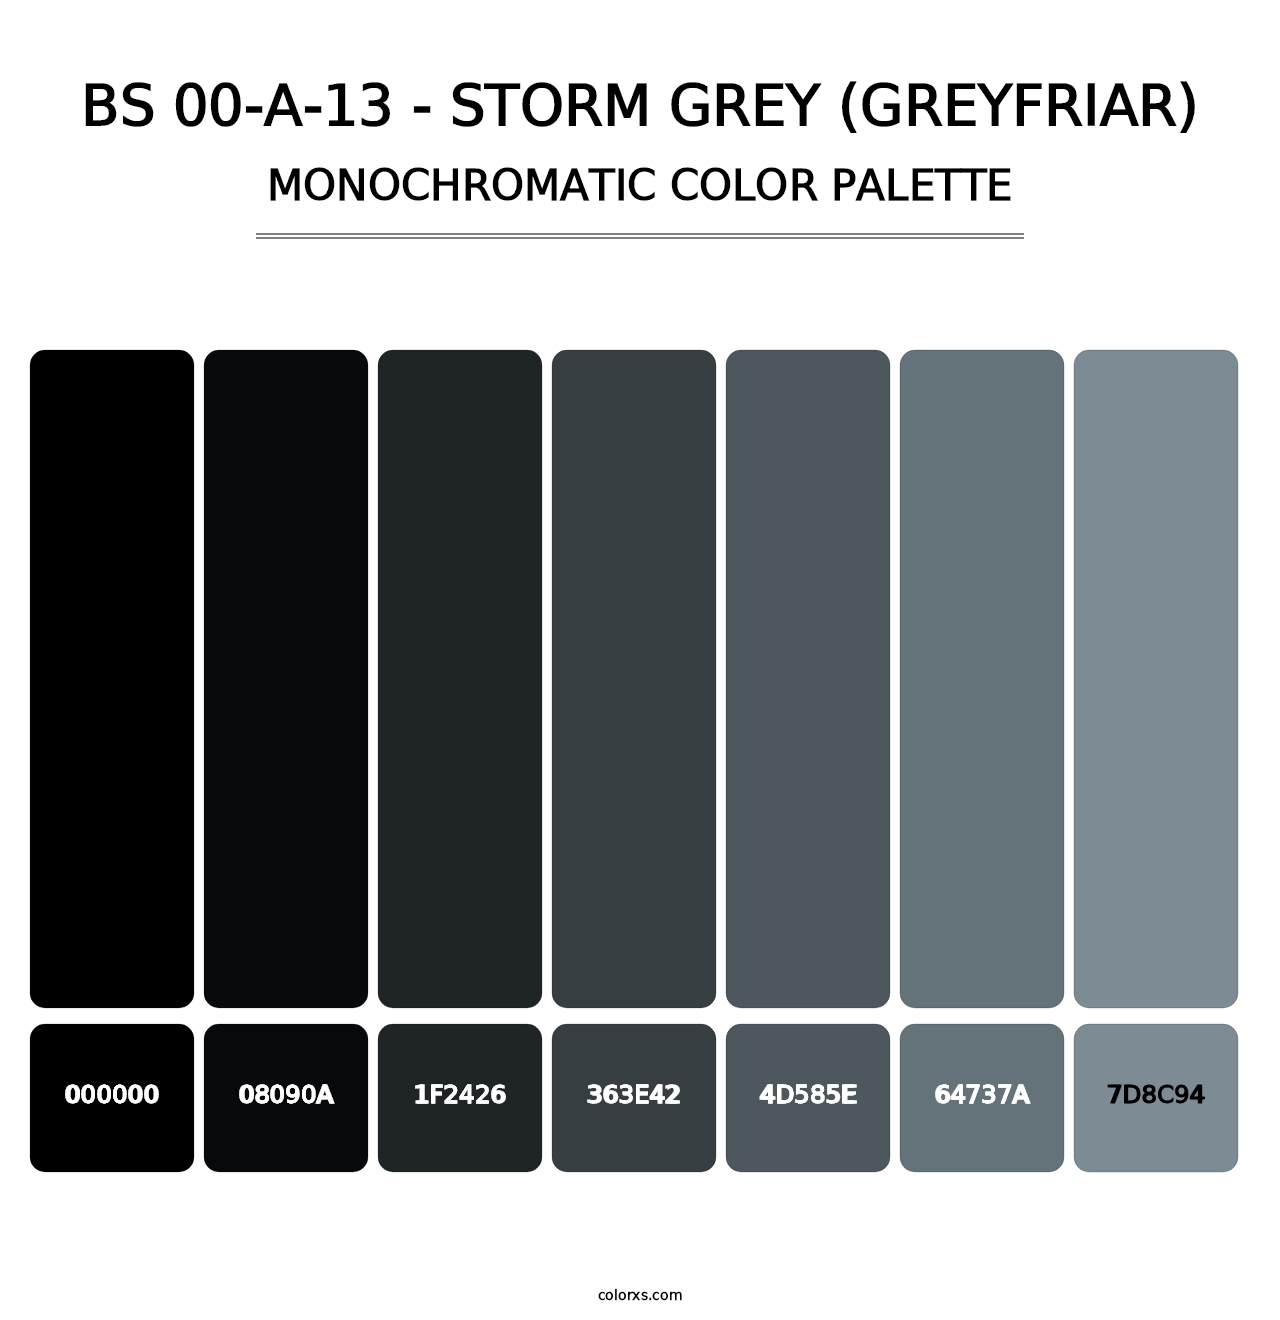 BS 00-A-13 - Storm Grey (Greyfriar) - Monochromatic Color Palette